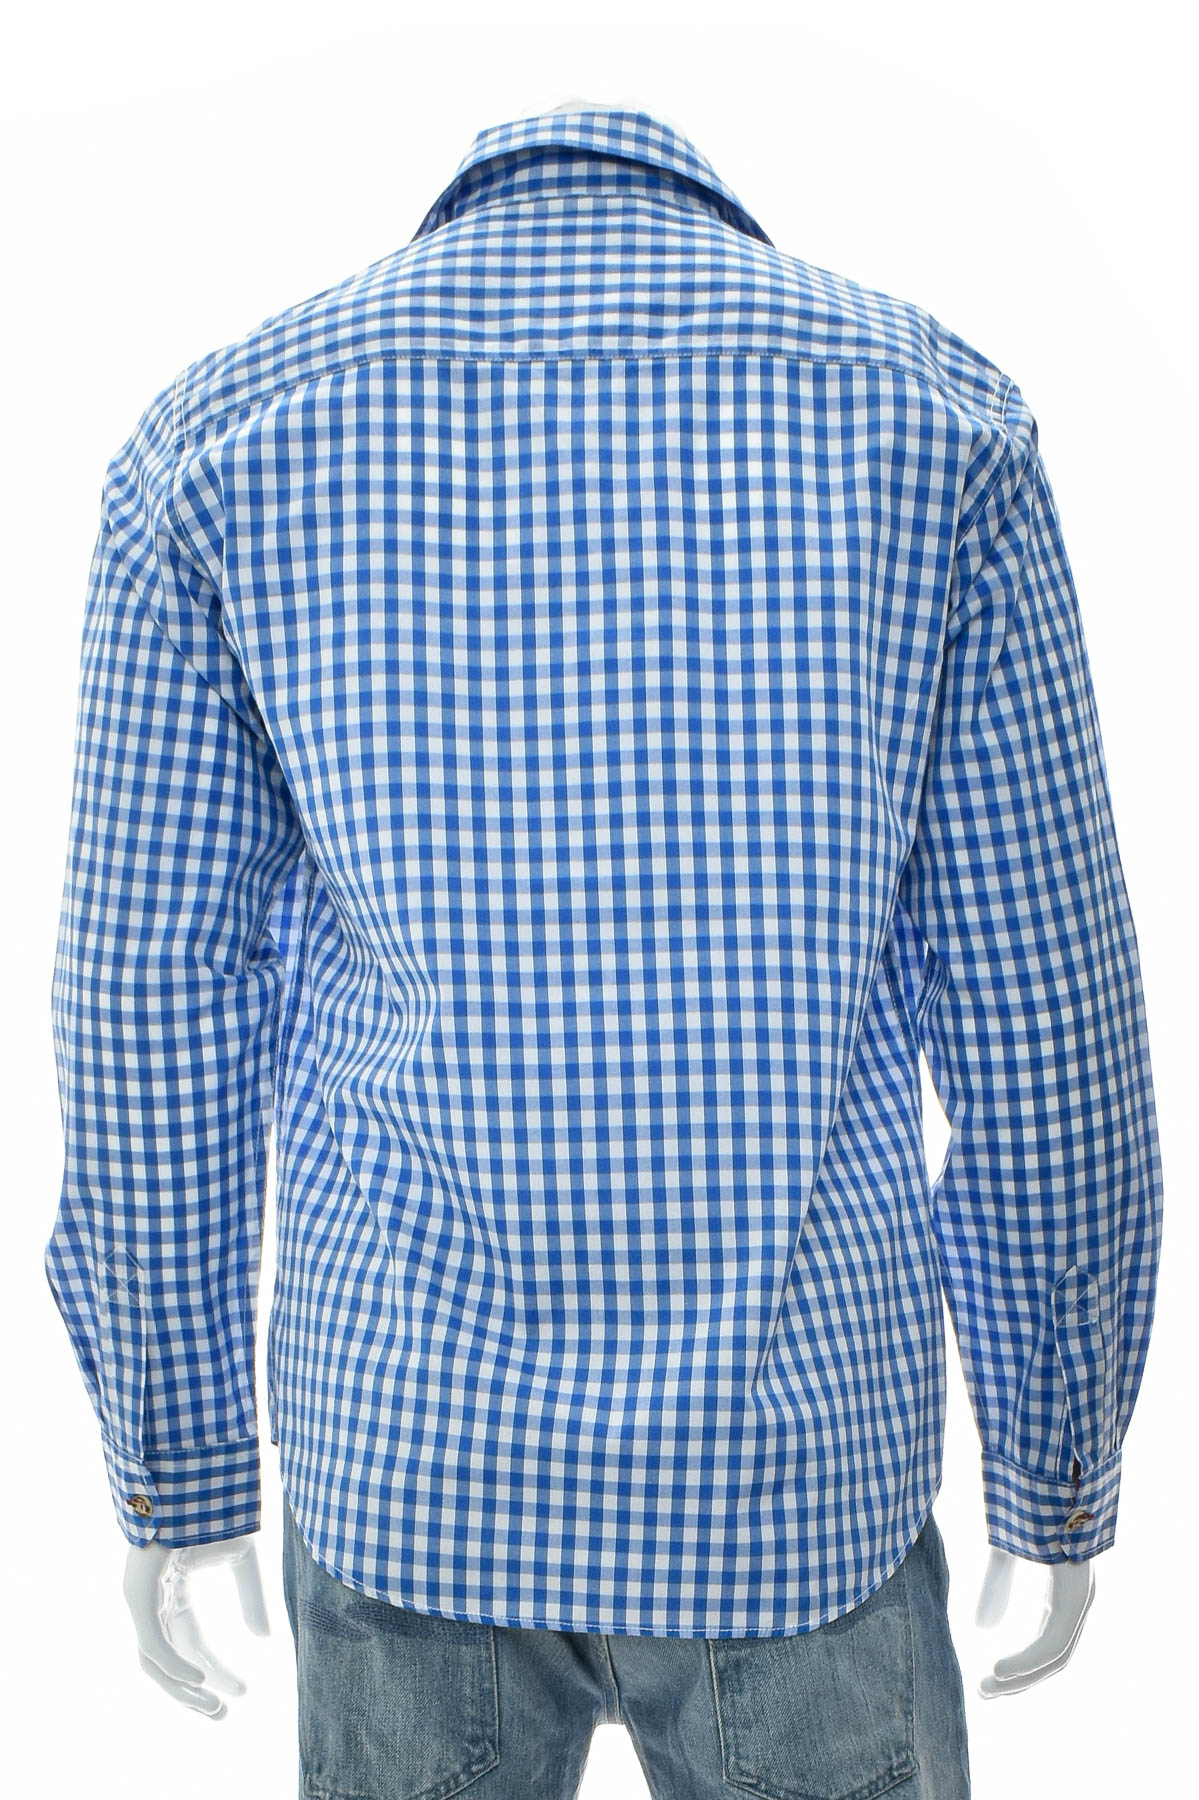 Men's shirt - STOCKERPOINT - 1